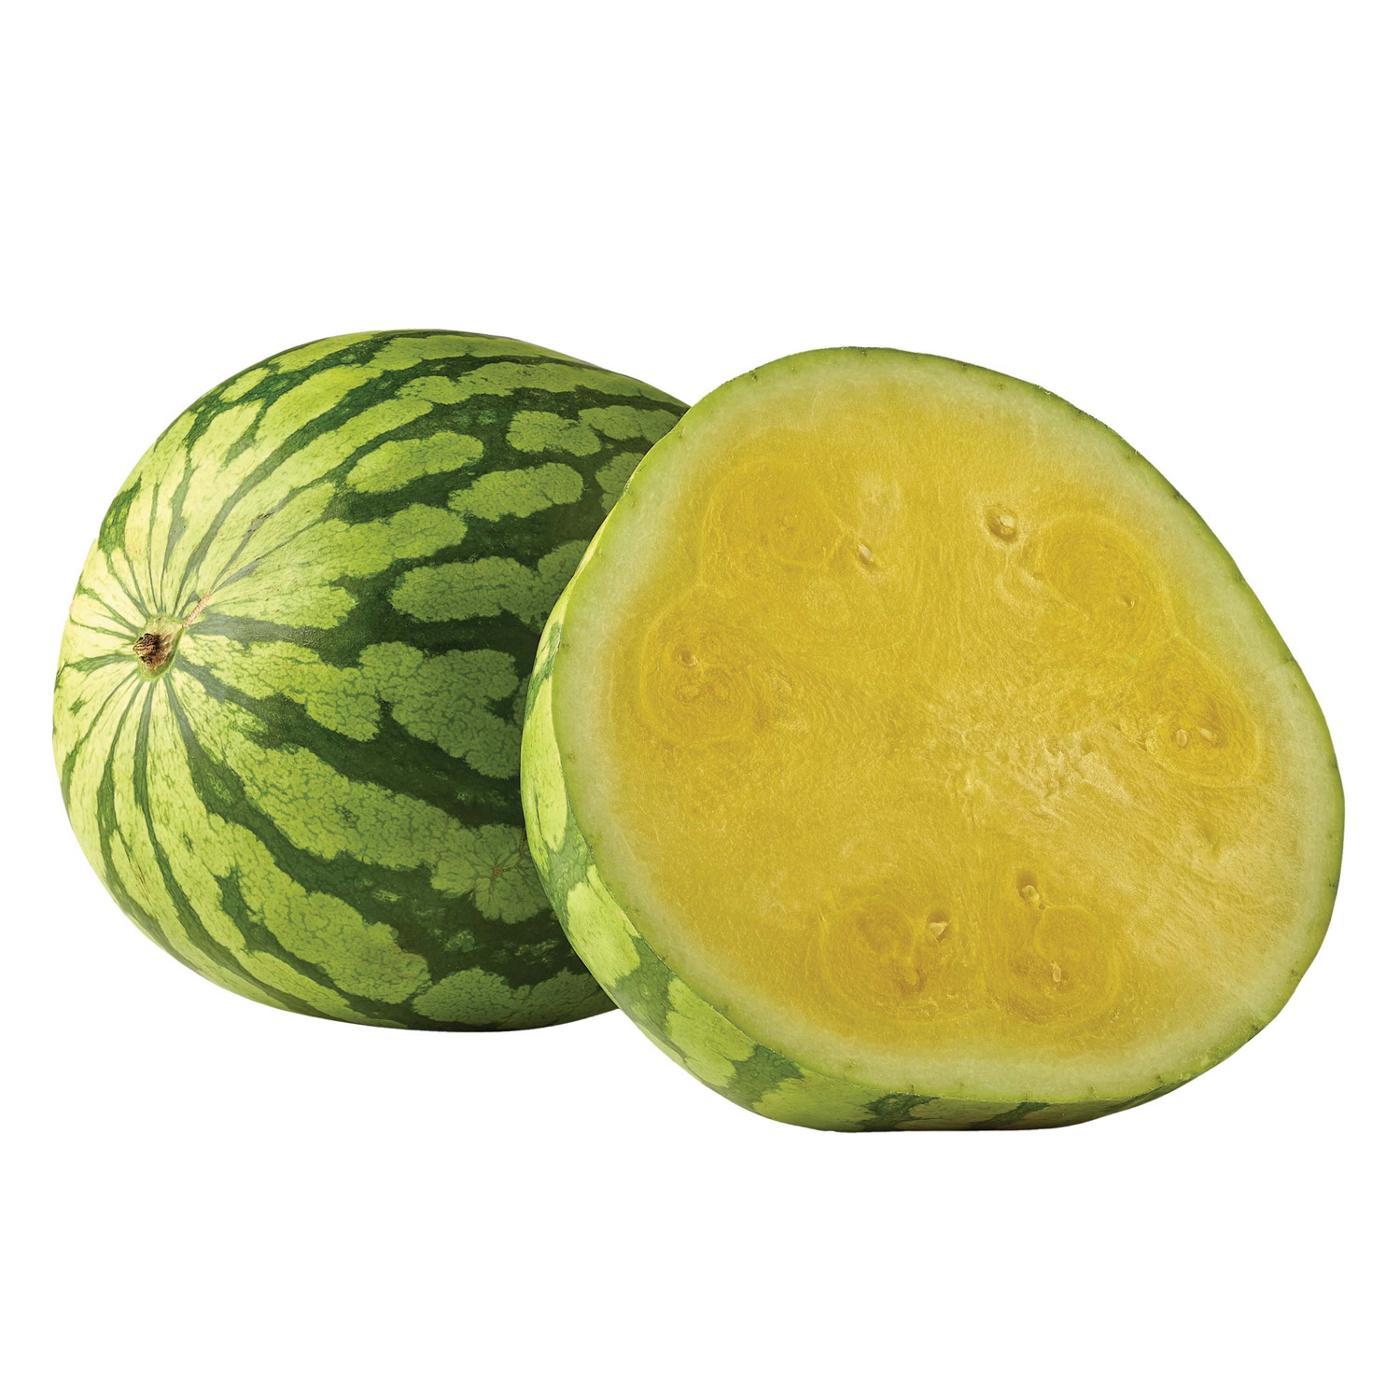 yellow seedless watermelon